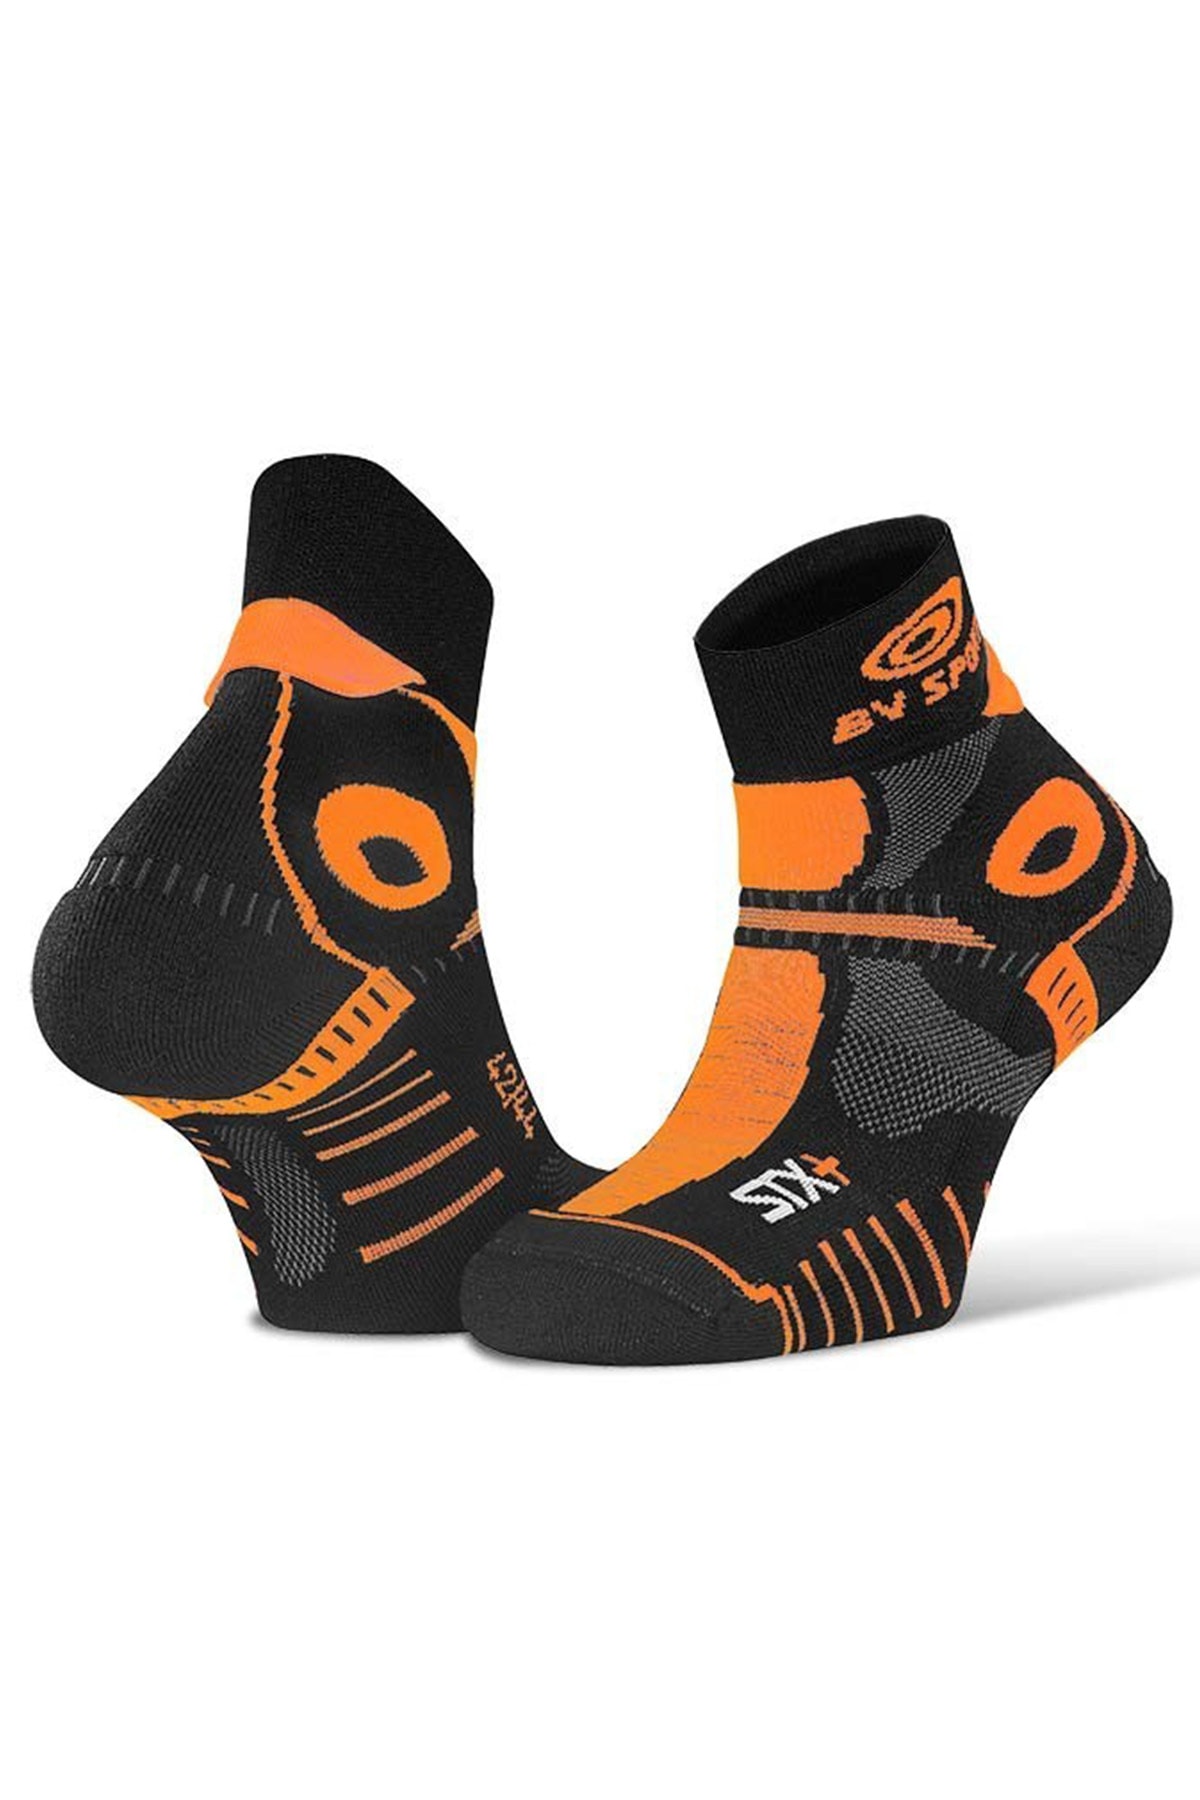 Pink Trend Bv Sports Trail Sock Stx+ Evo Siyah-turuncu Özel Üretim Üstün Performans Dağcı Çorabı